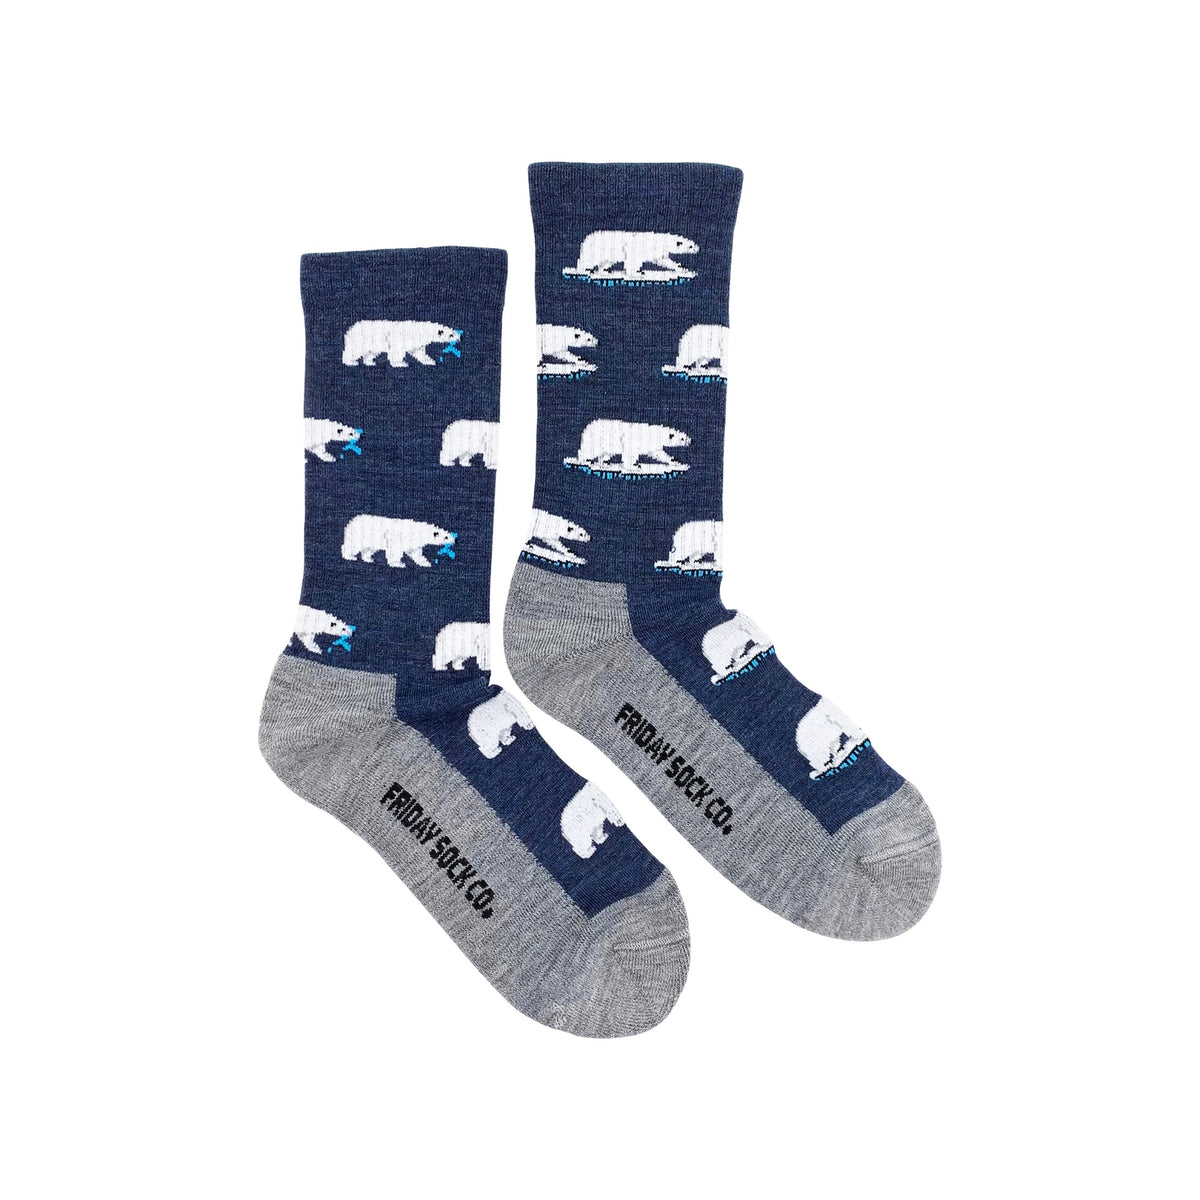 Friday Sock Co. - Women's Socks Polar Bear Mismatched